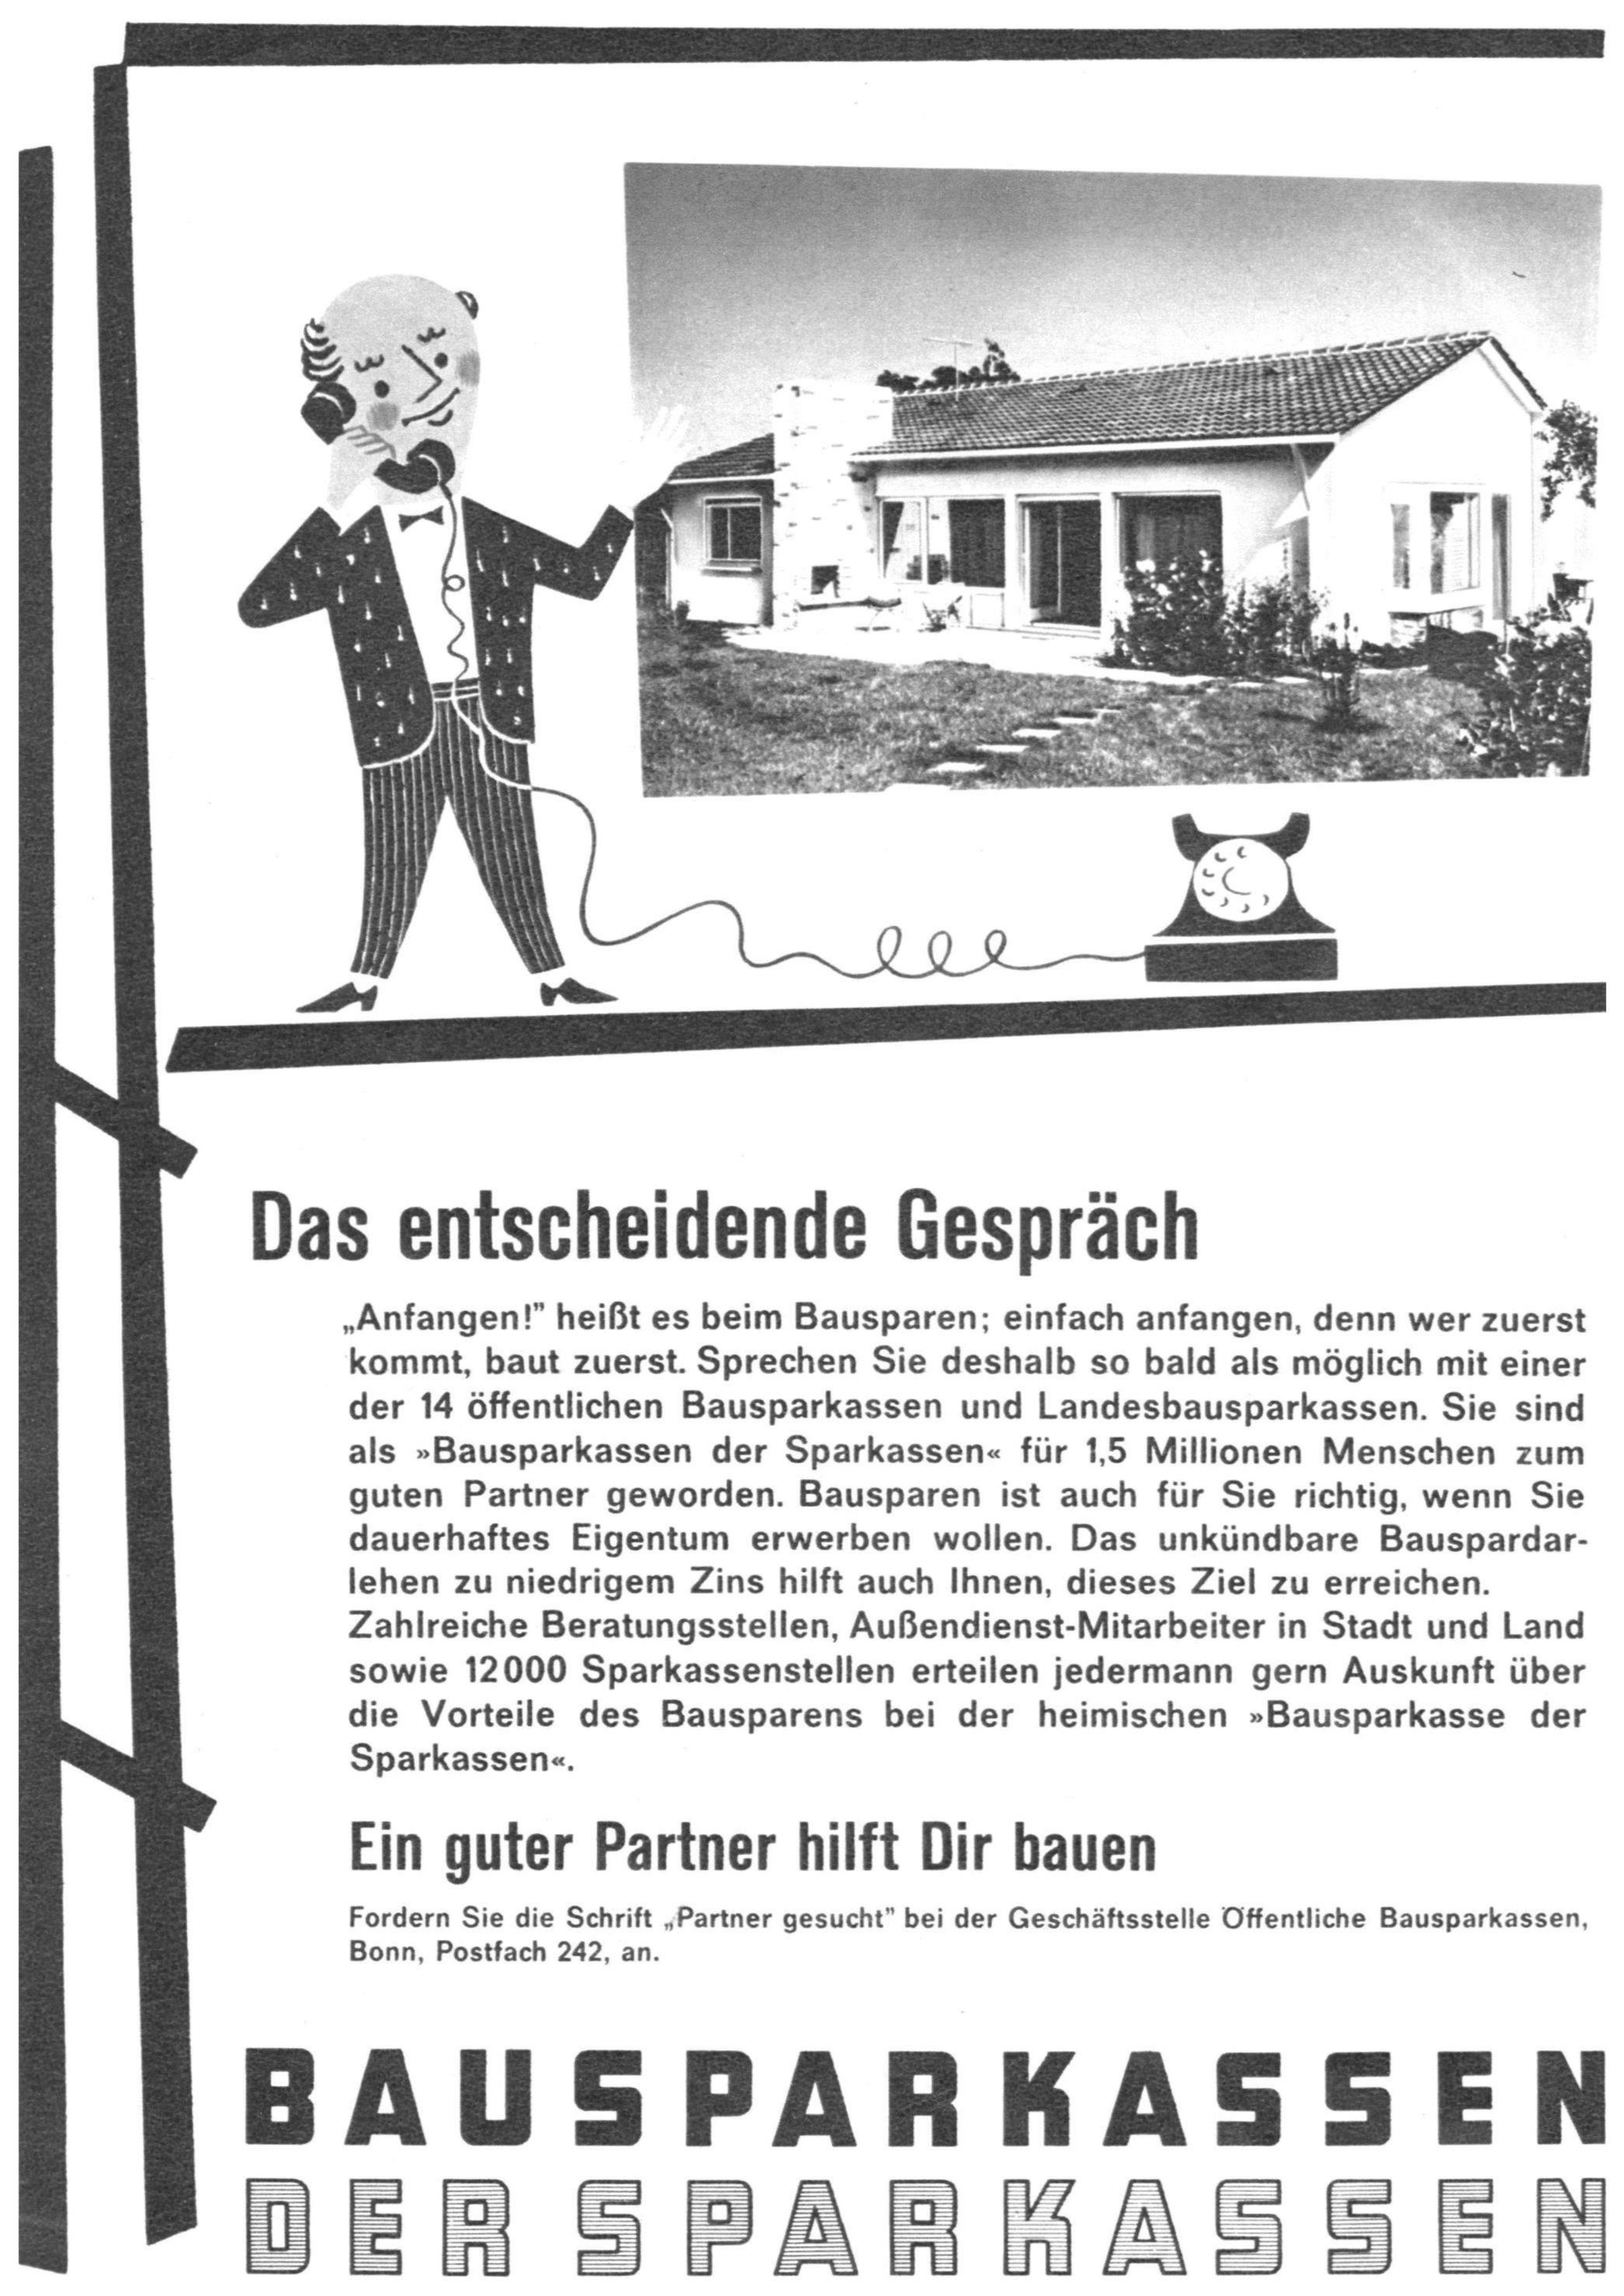 Bausparkassen 1961 0.jpg